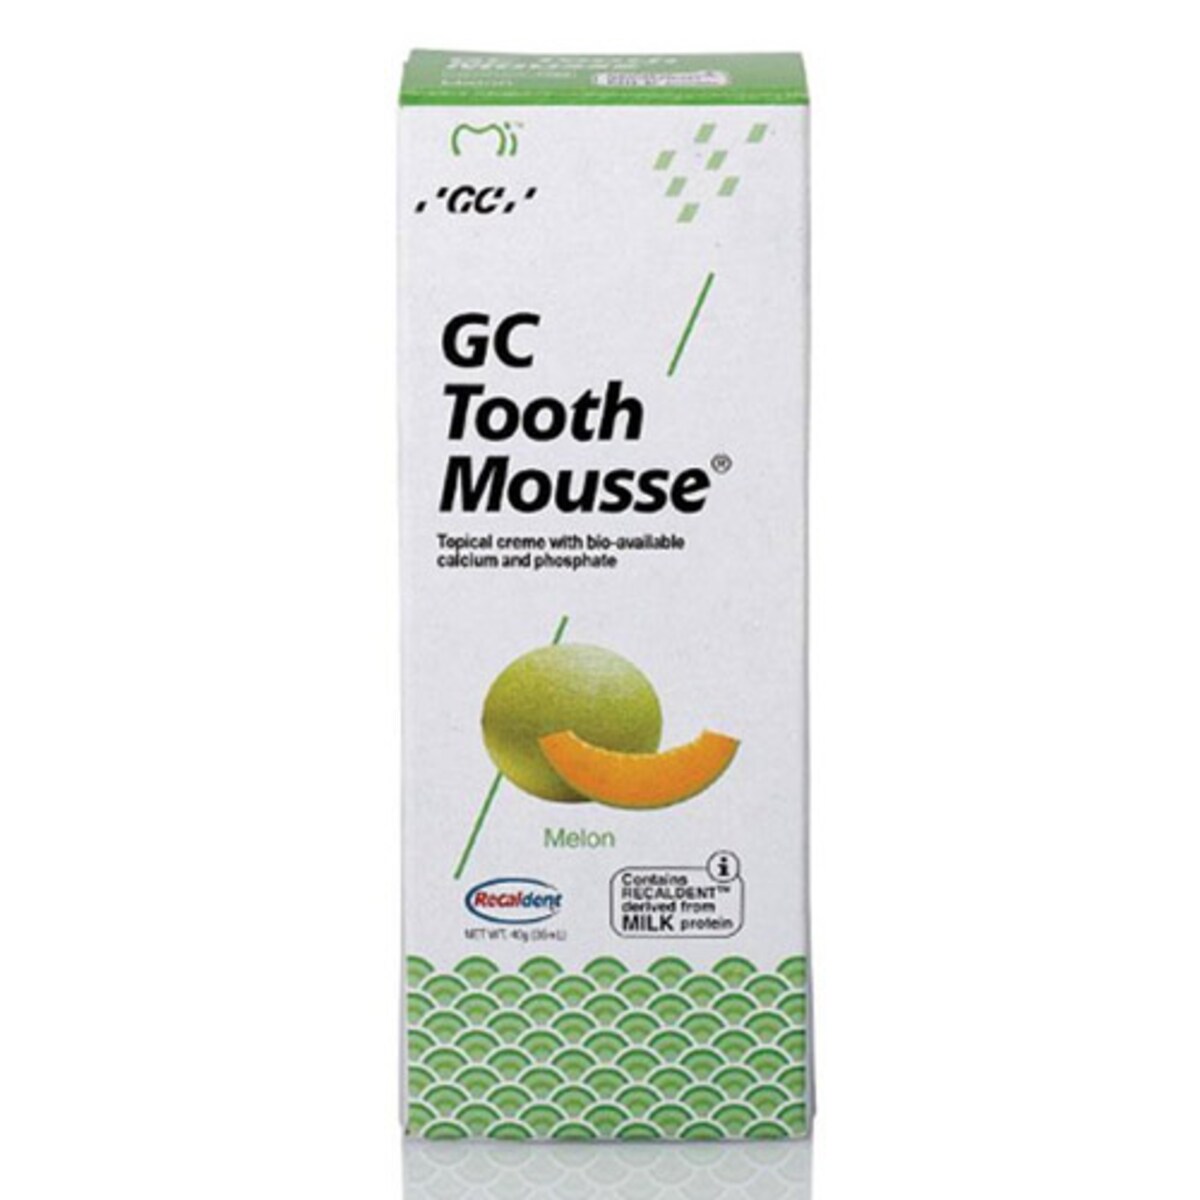 GC Tooth Mousse Melon Flavour 40g